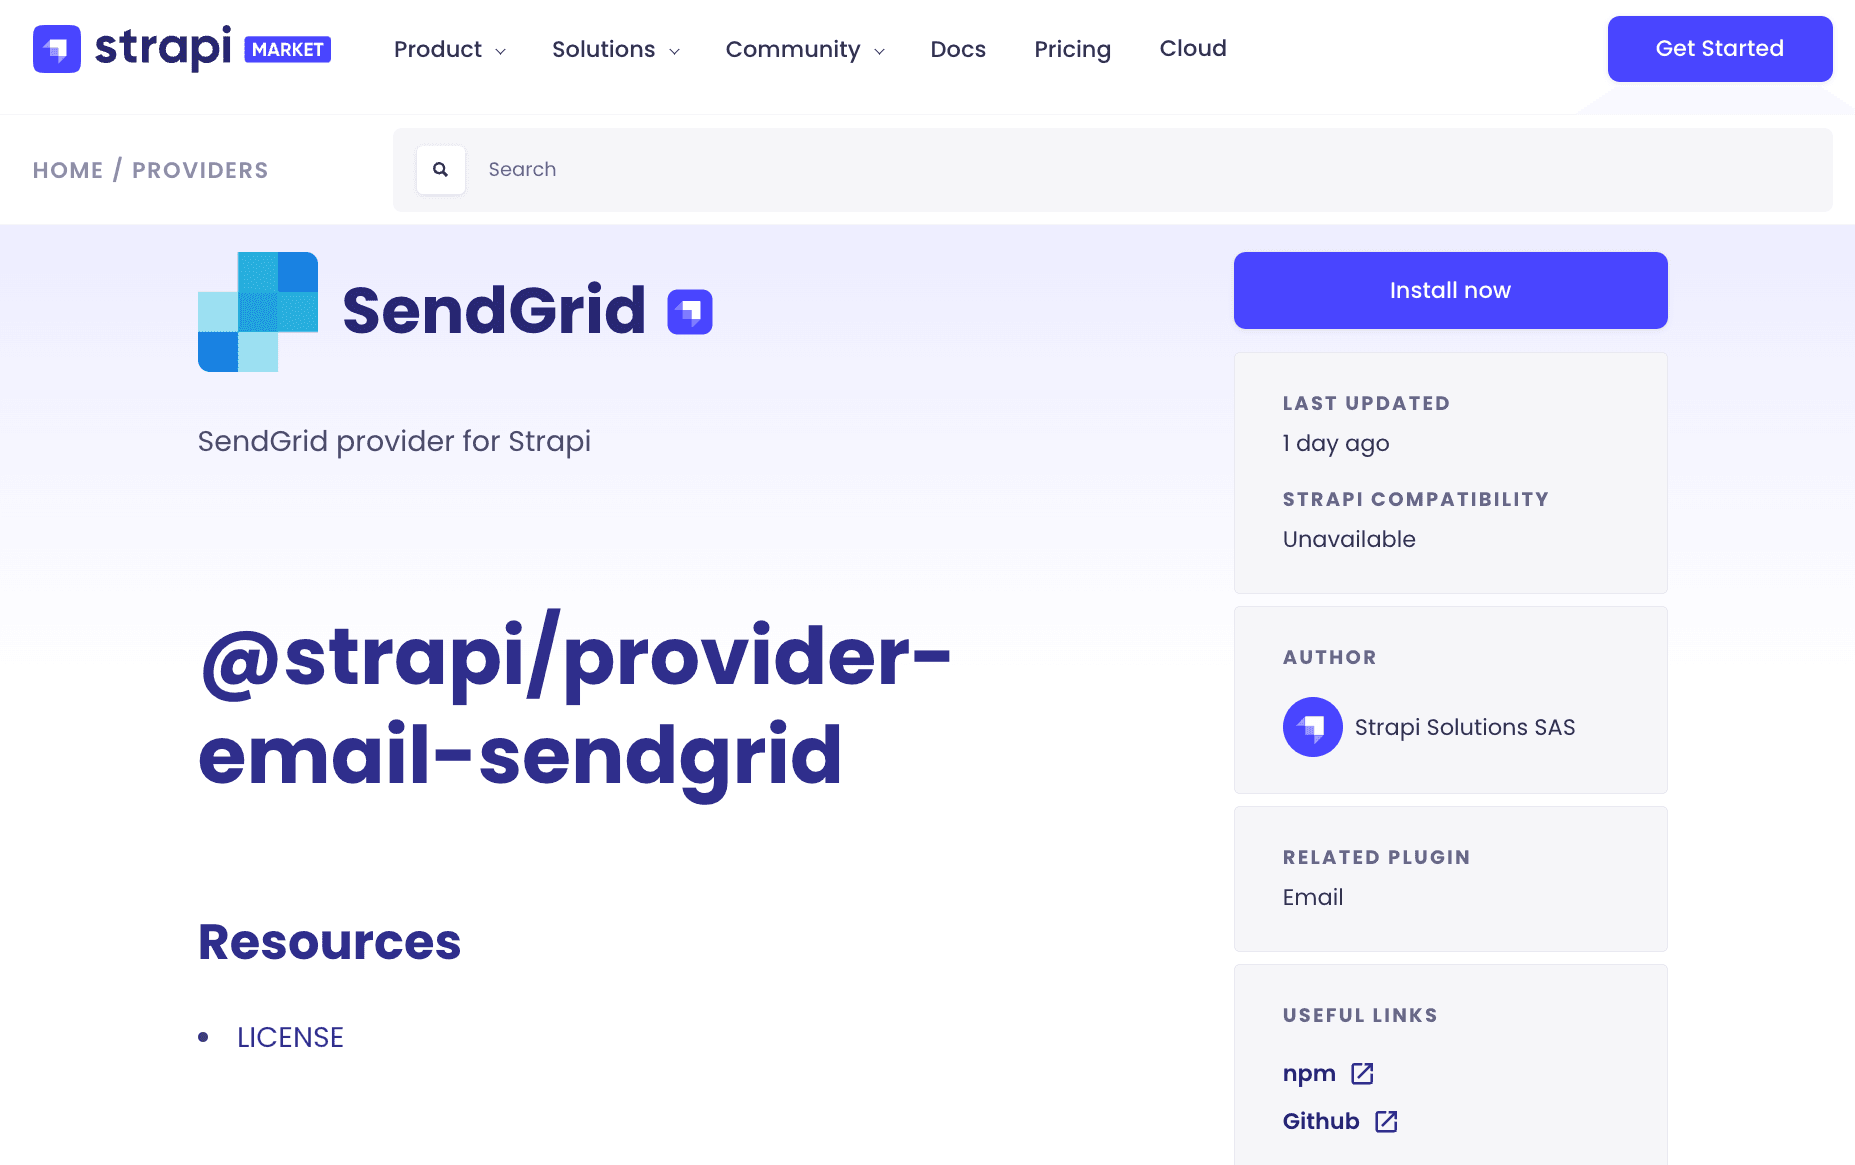 @strapi:provider-email-sendgrid